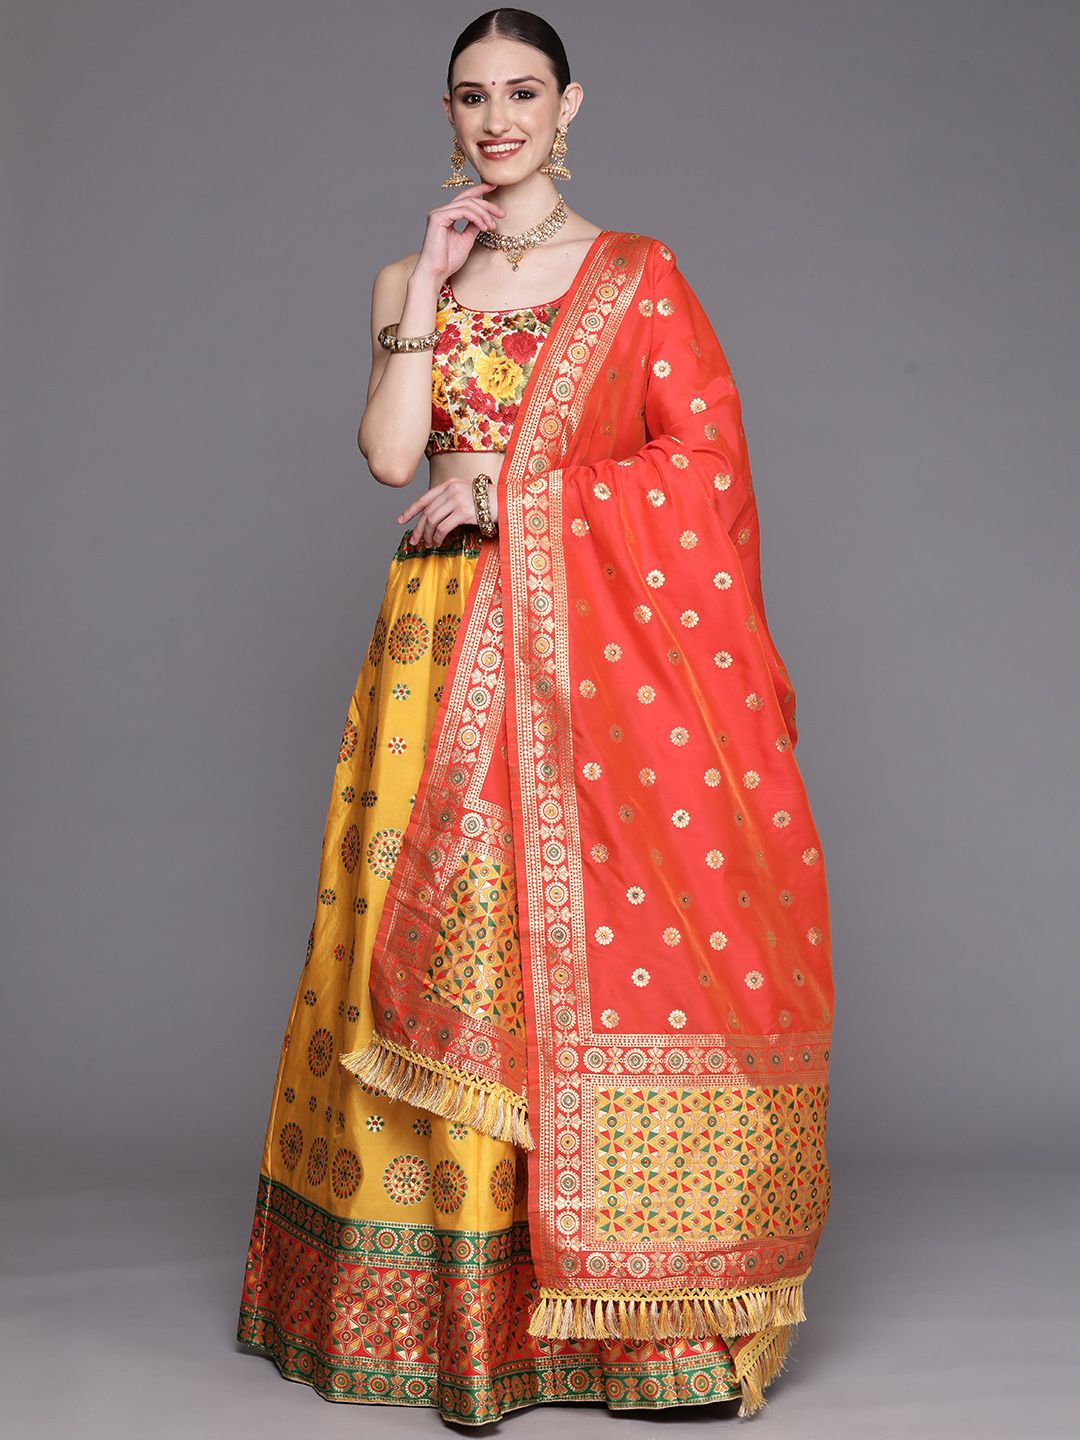 Chhabra 555 Yellow & Orange Beads and Stones Kalamkari Semi-Stitched Lehenga & Unstitched Blouse With Price in India